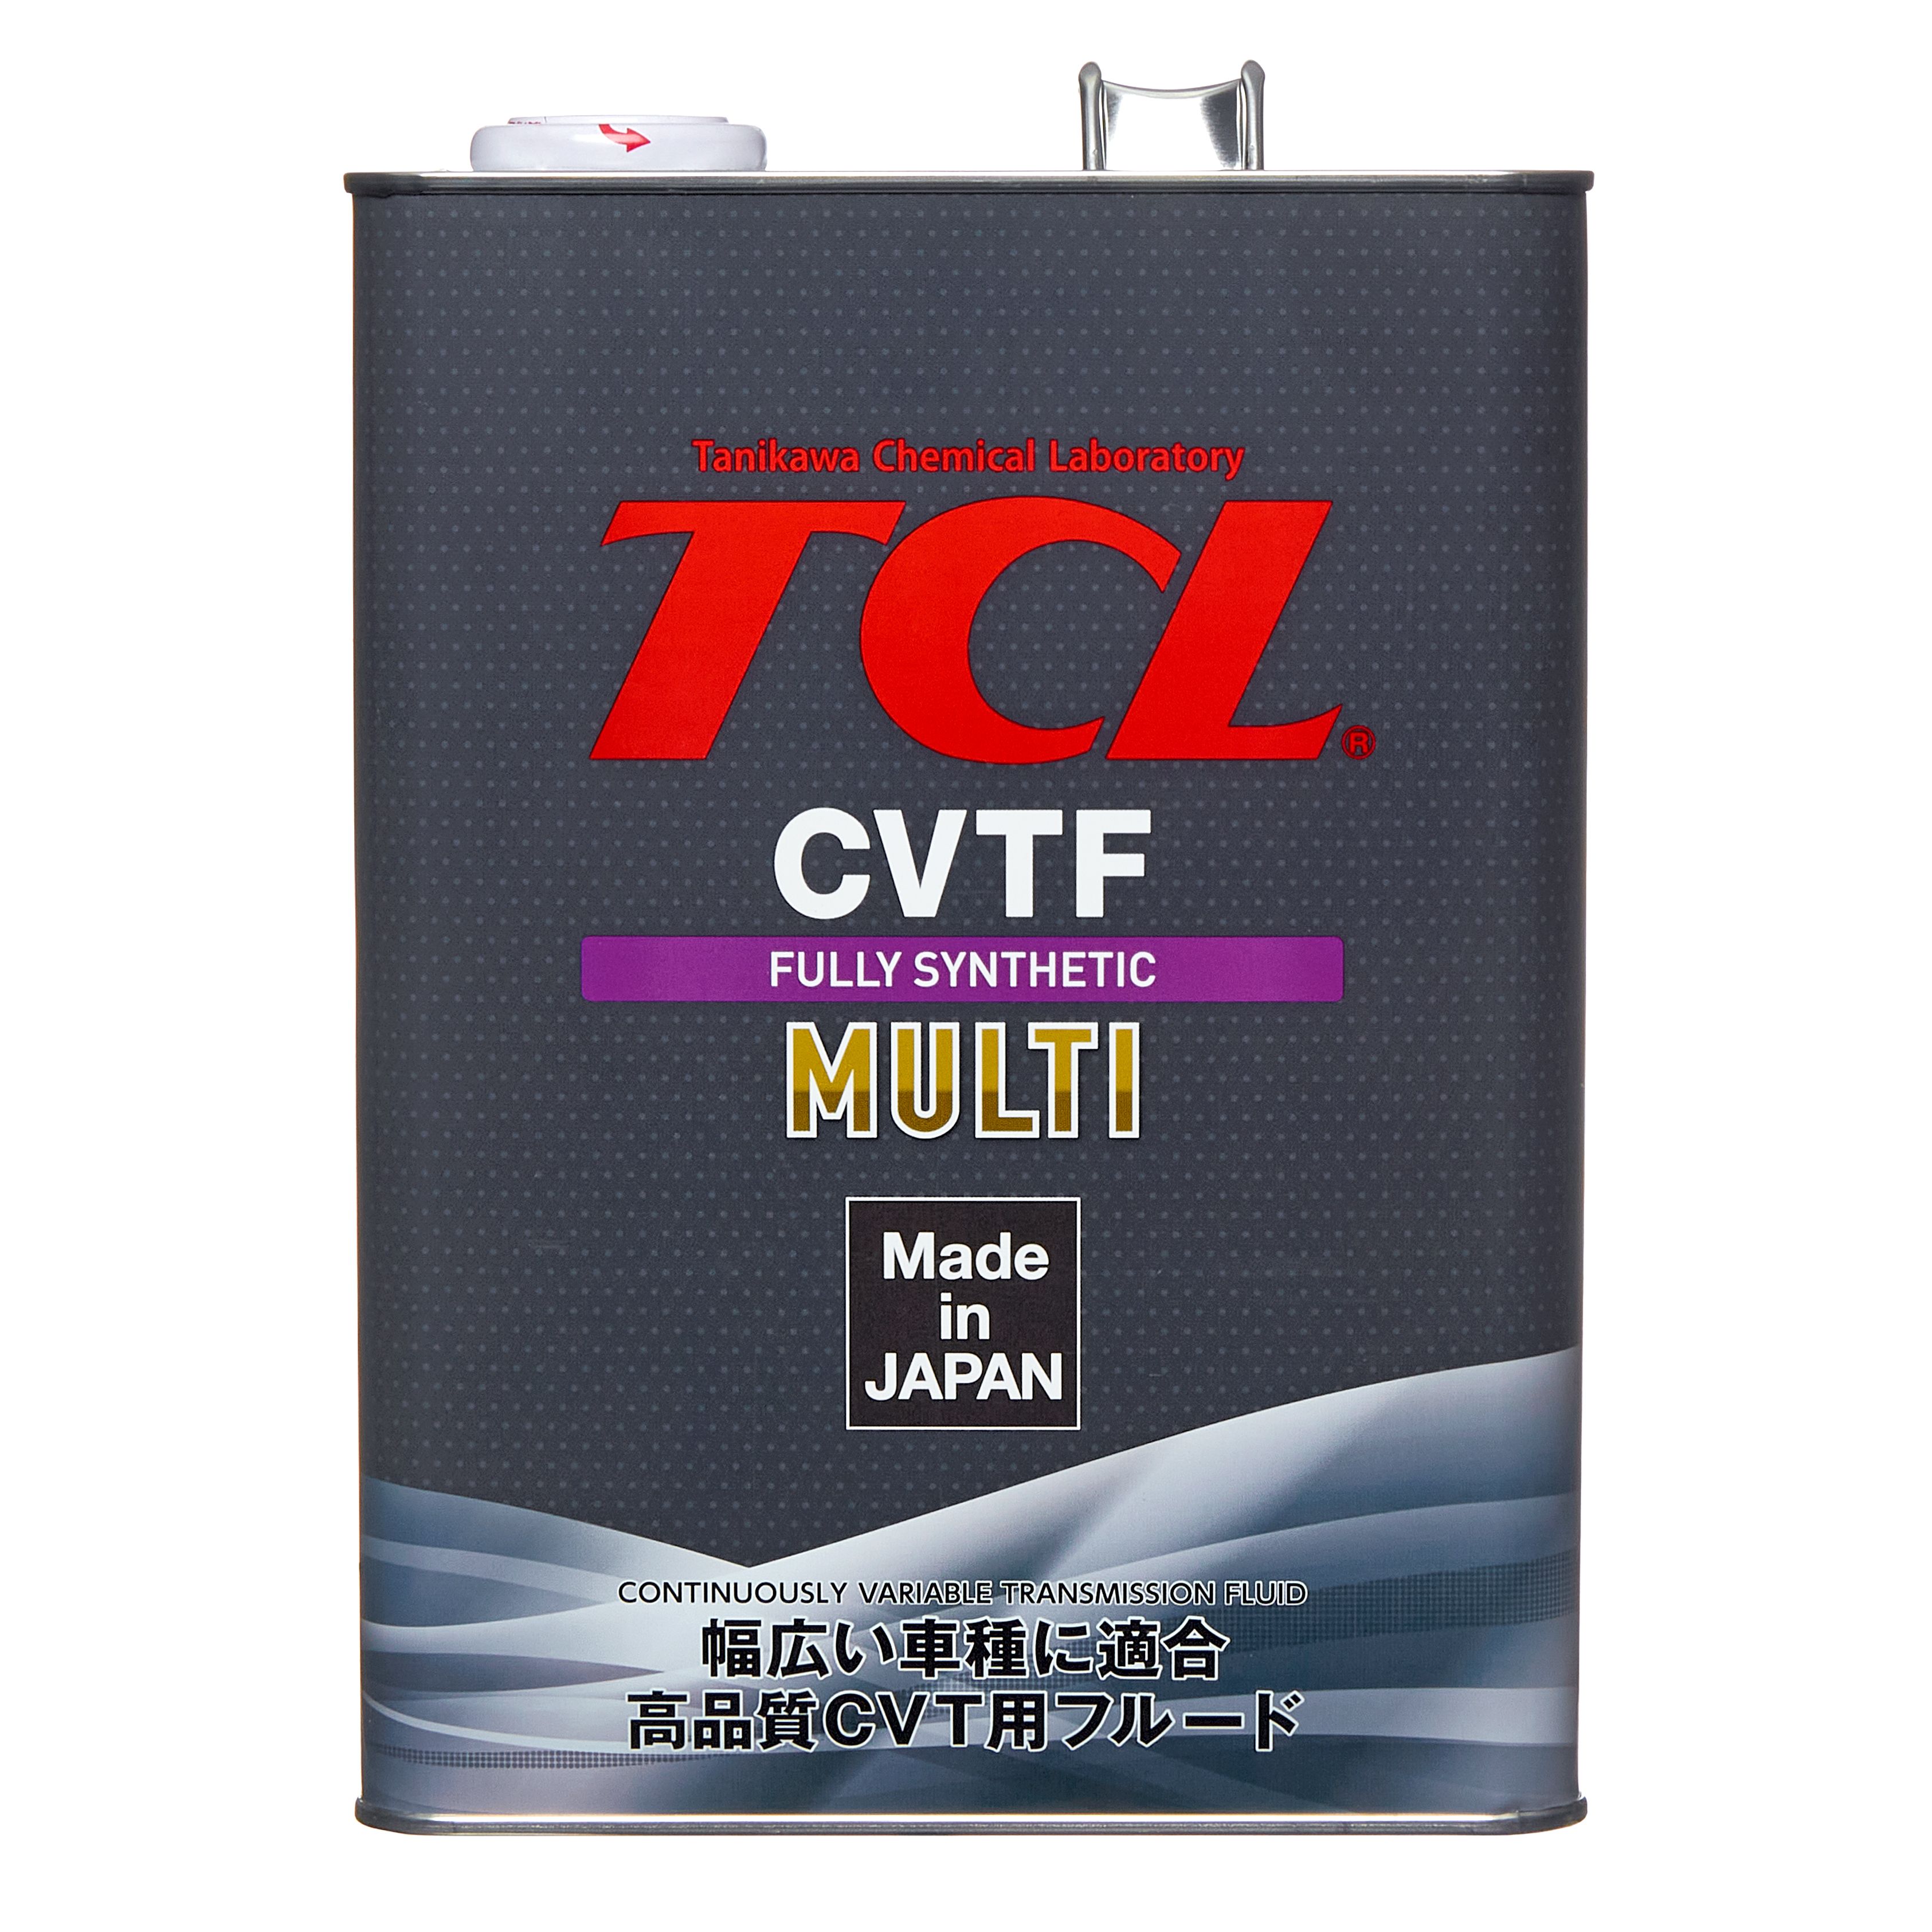 Жидкость для вариатора TCL CVTF Multi, 1825133, 4л